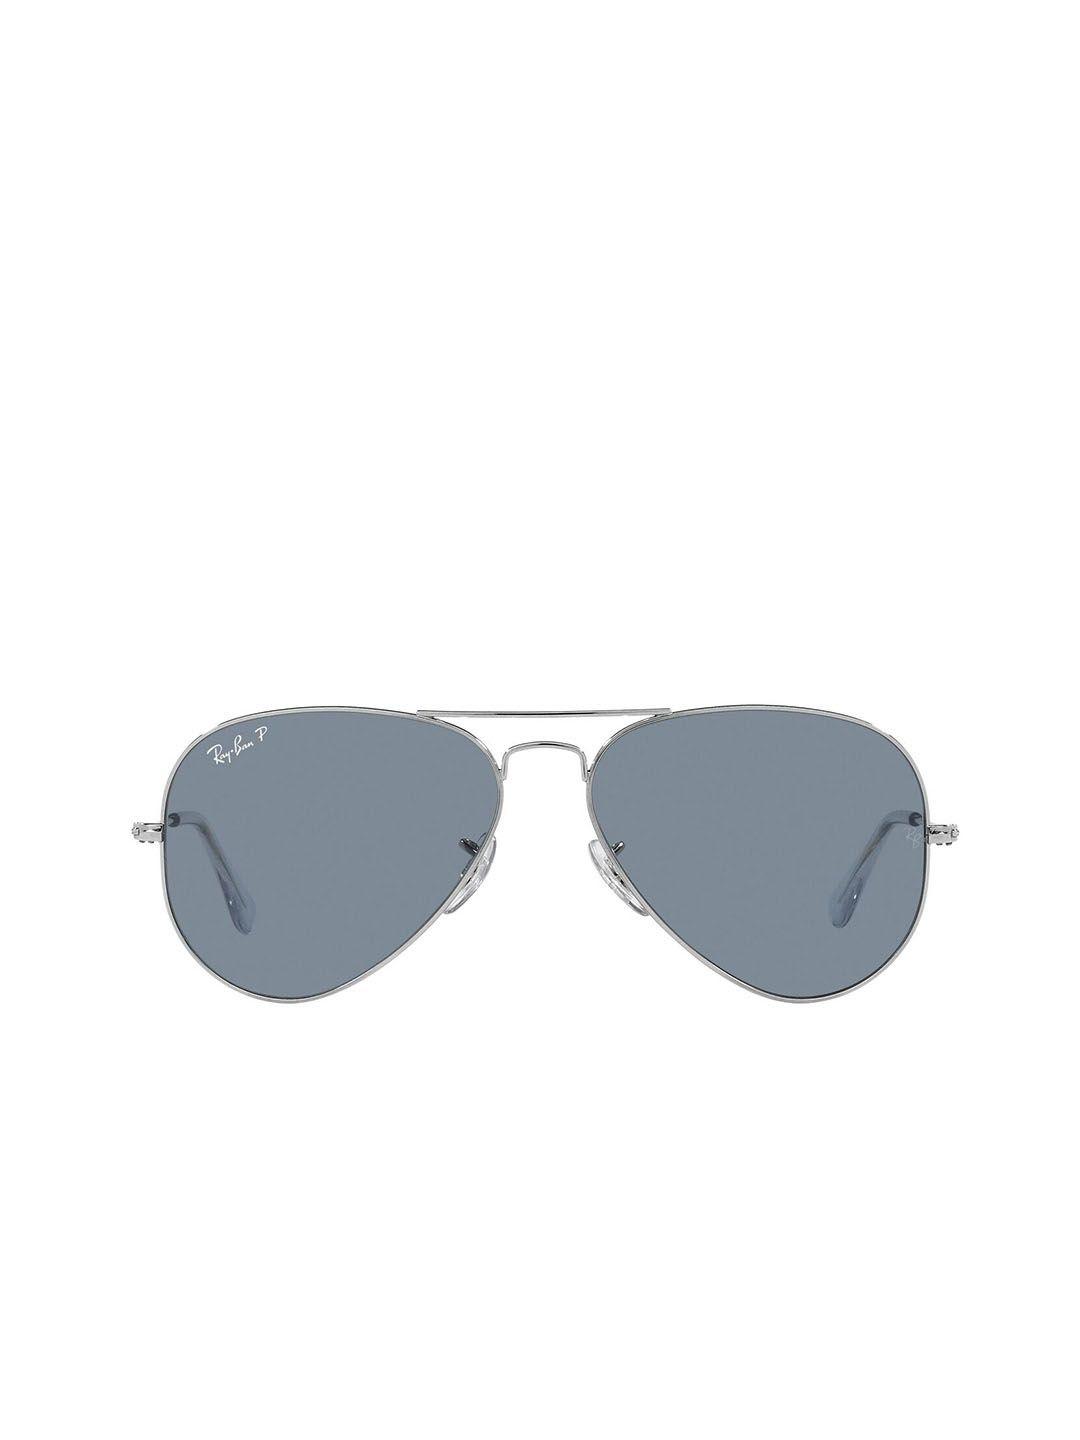 ray-ban aviator sunglasses with polarised lens 8056597860727